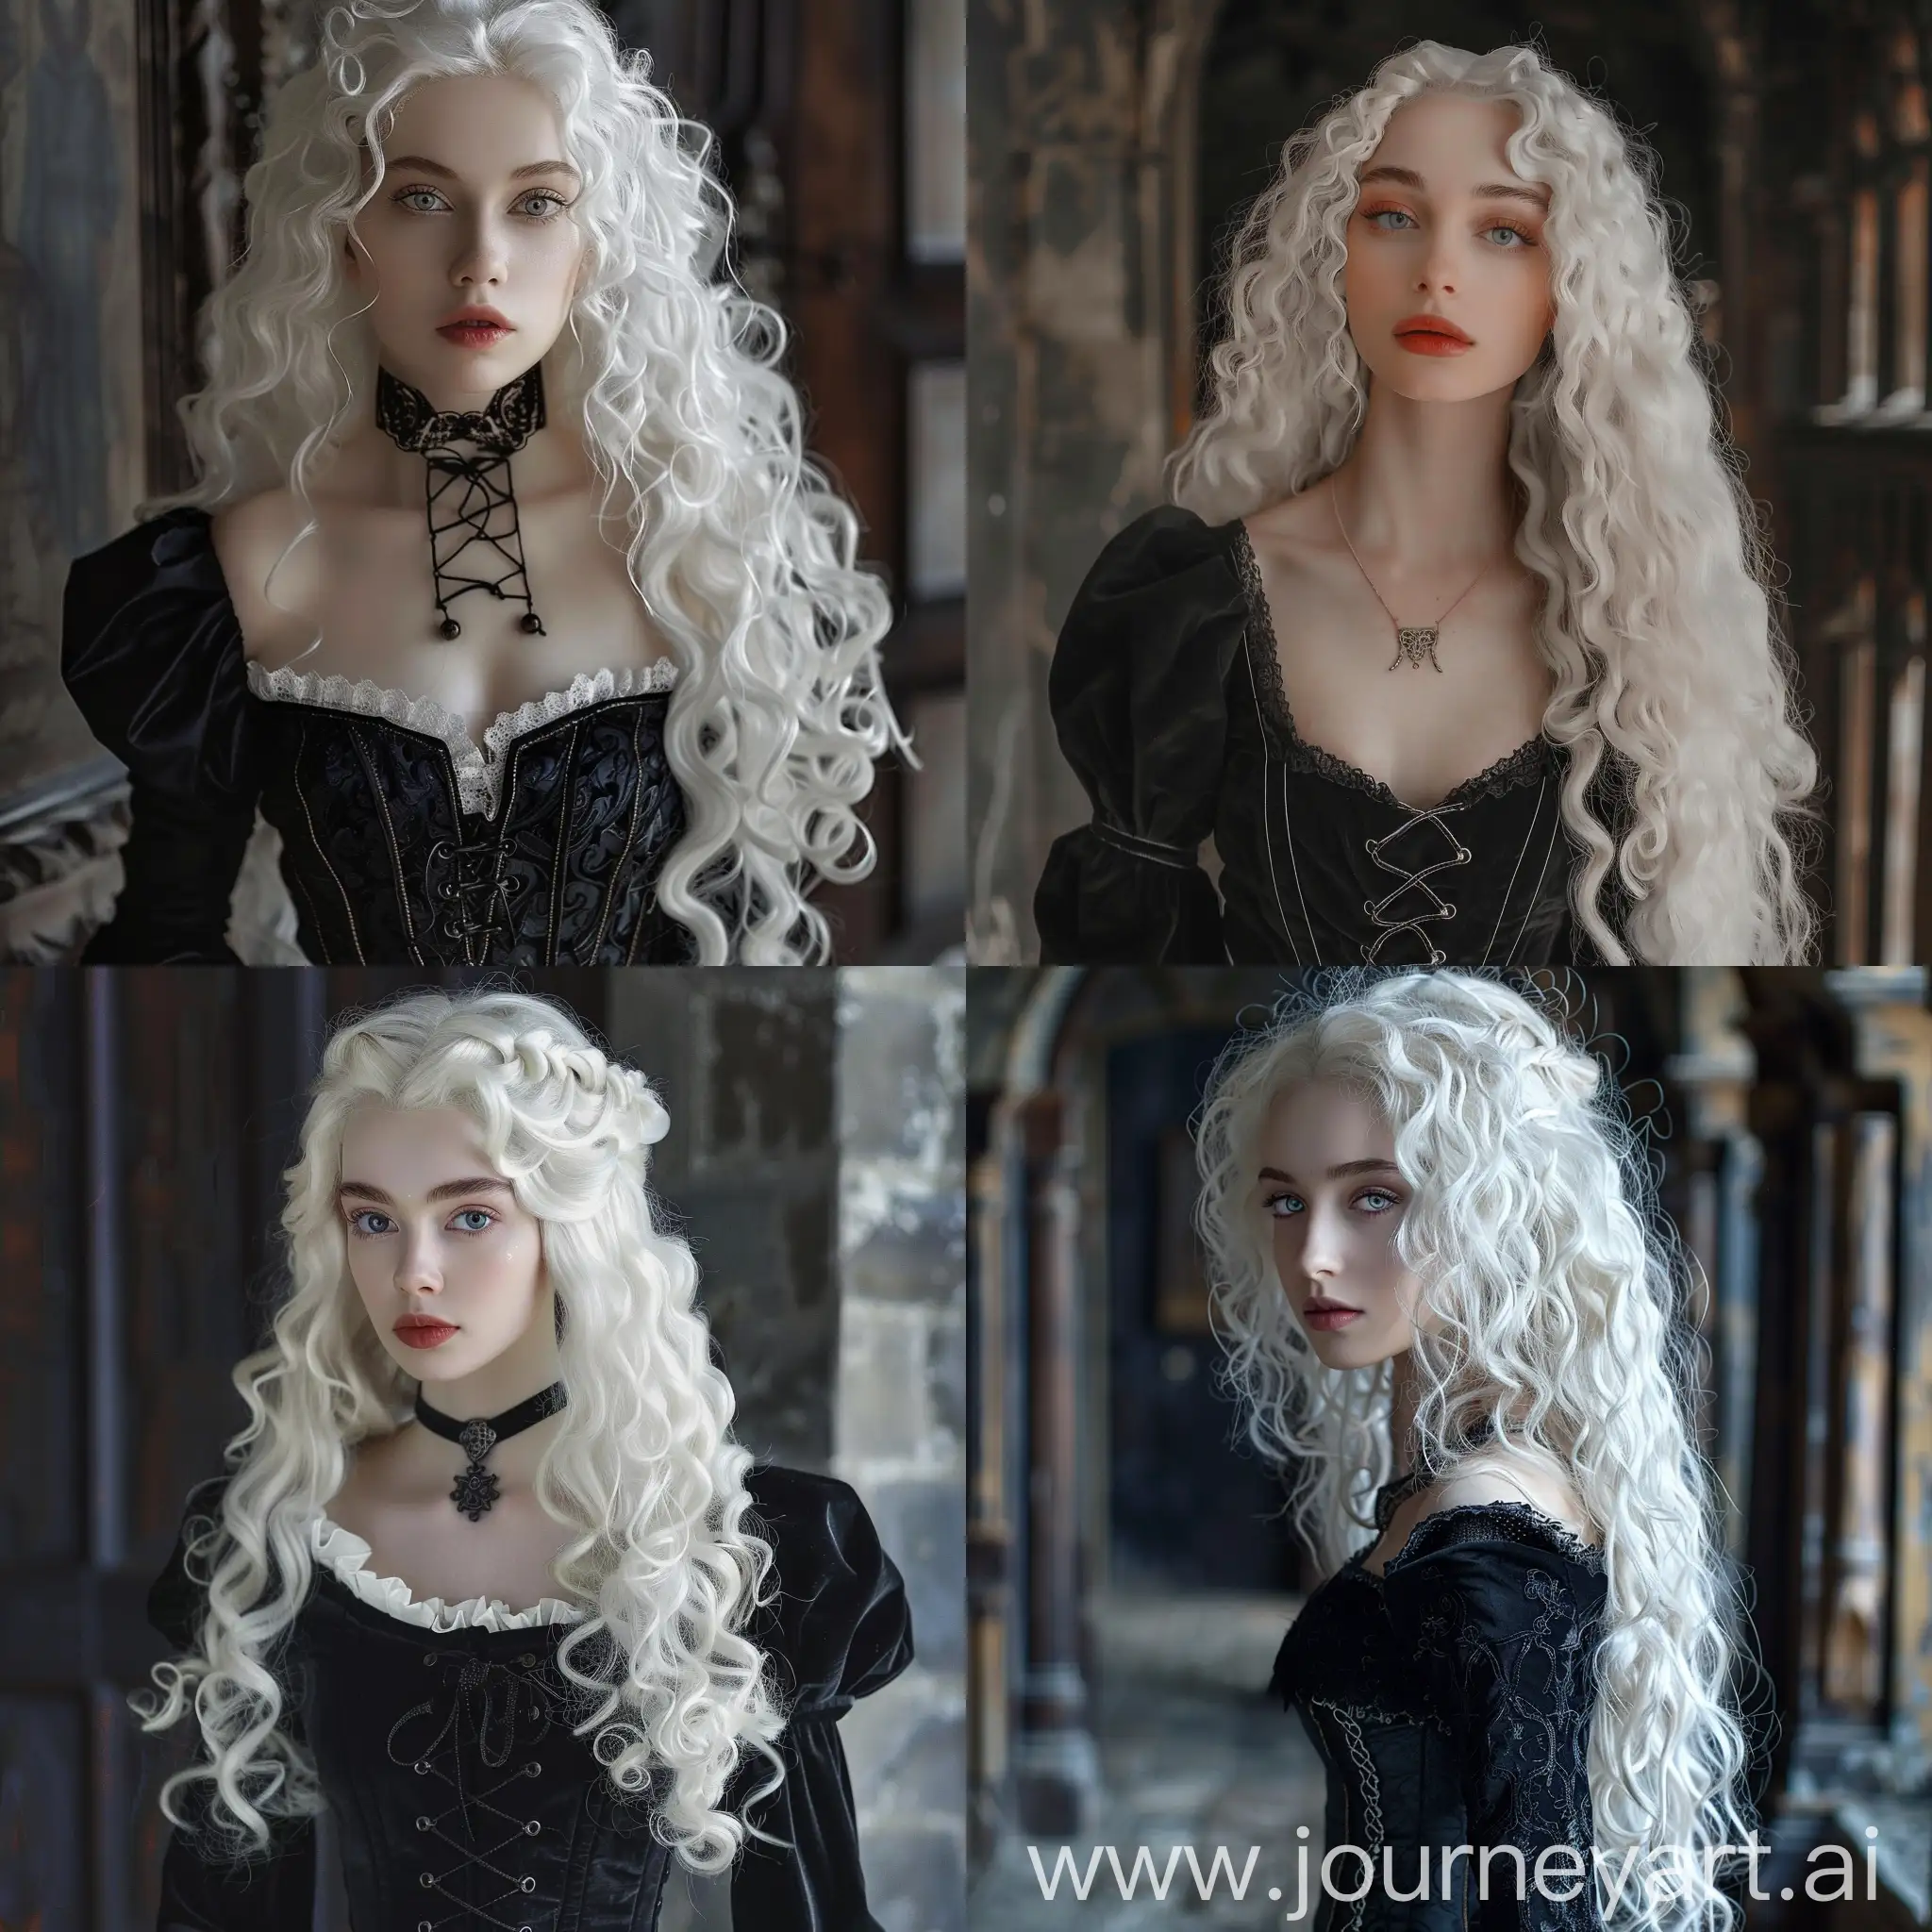 Medieval-WhiteHaired-Girl-in-FloorLength-Black-Dress